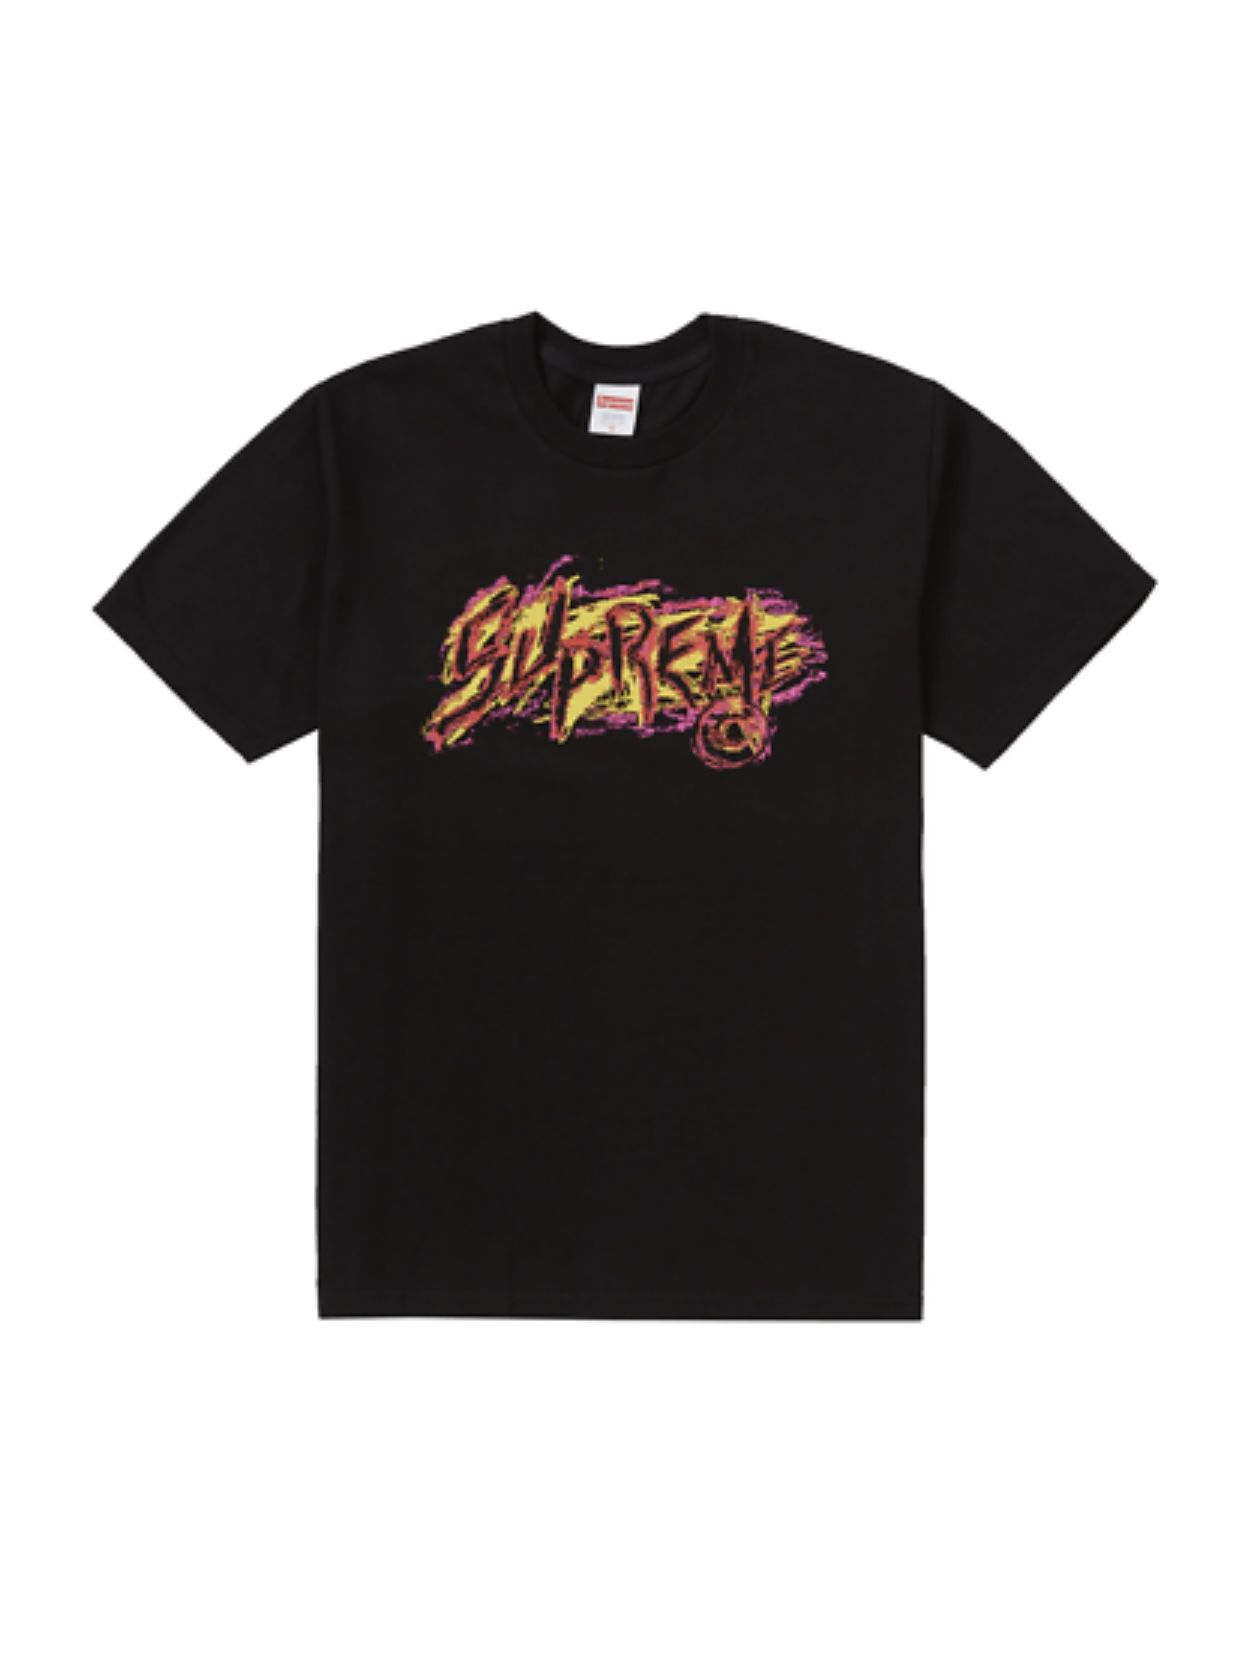 SUPREME  F/W 2020 New York Scratch Tee Shirt BLACK Men's XL